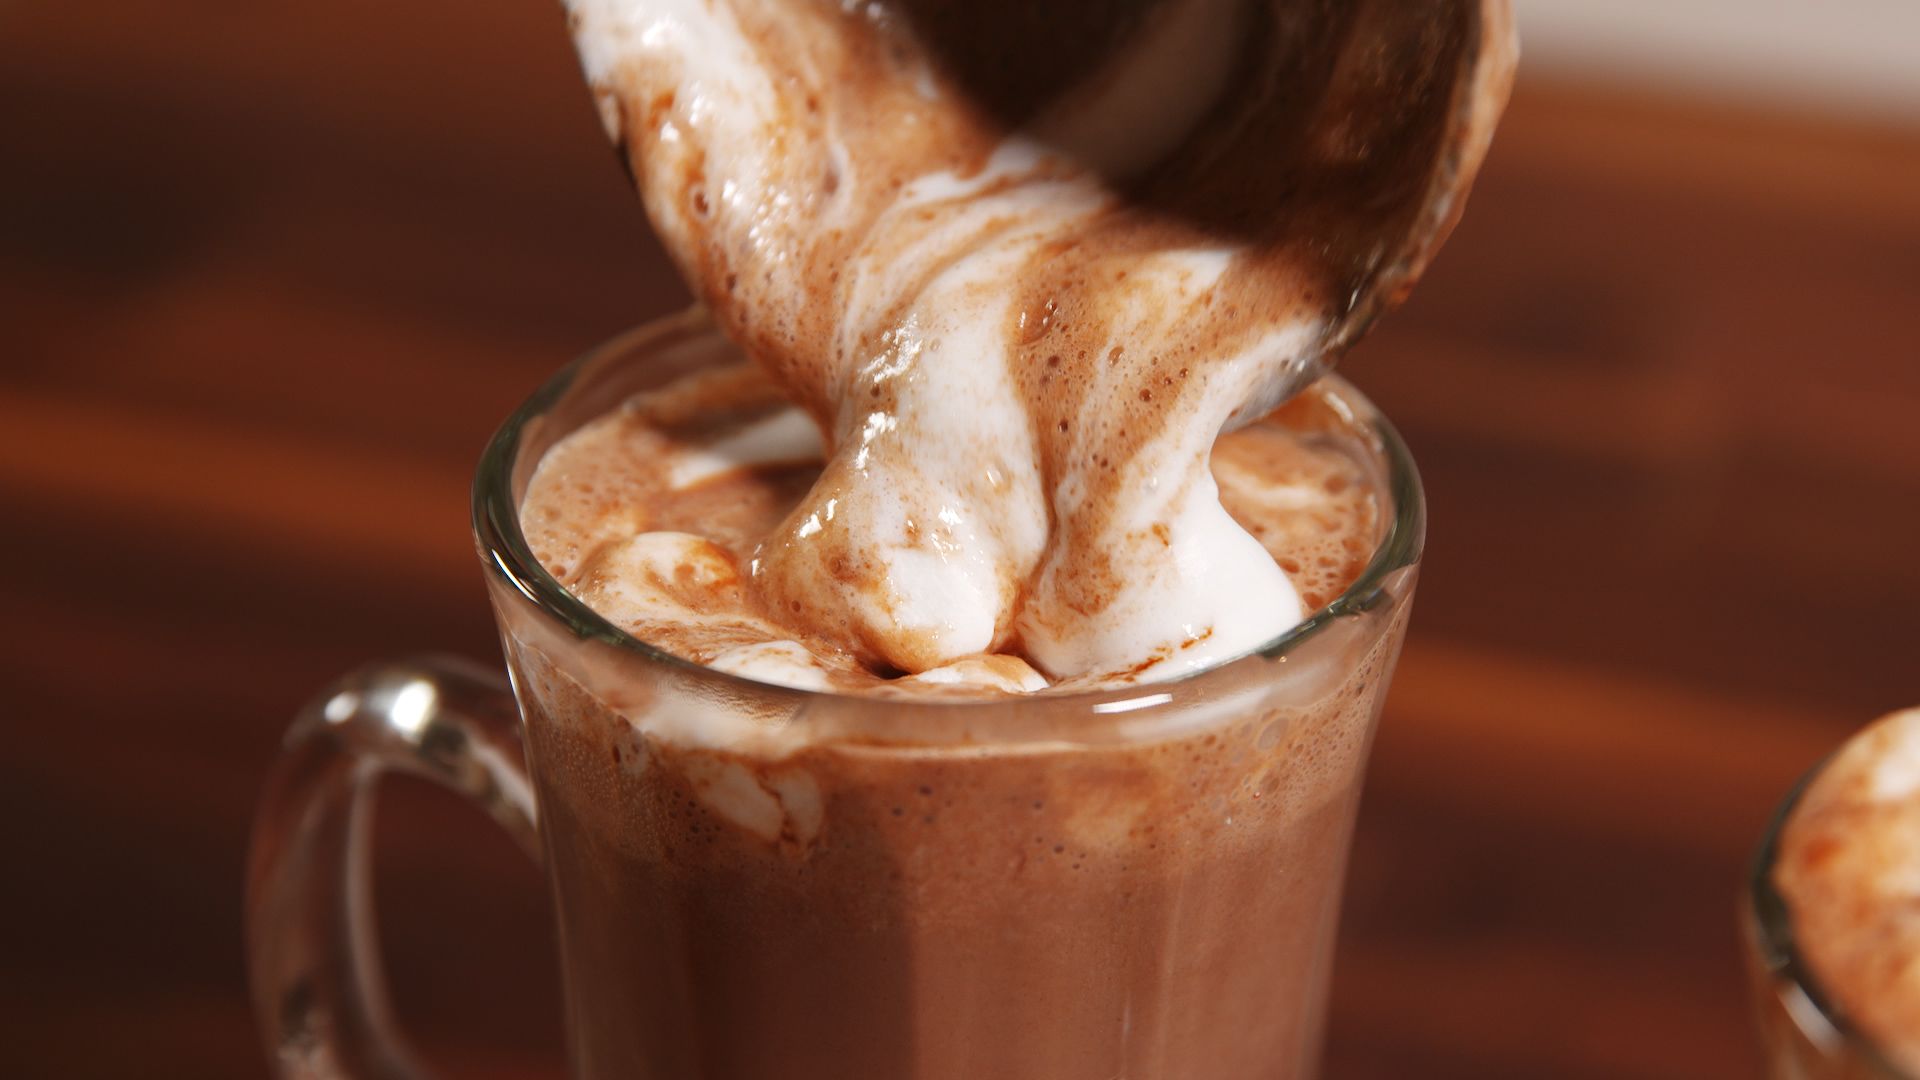 Crockpot Hot Chocolate - Kippi at Home